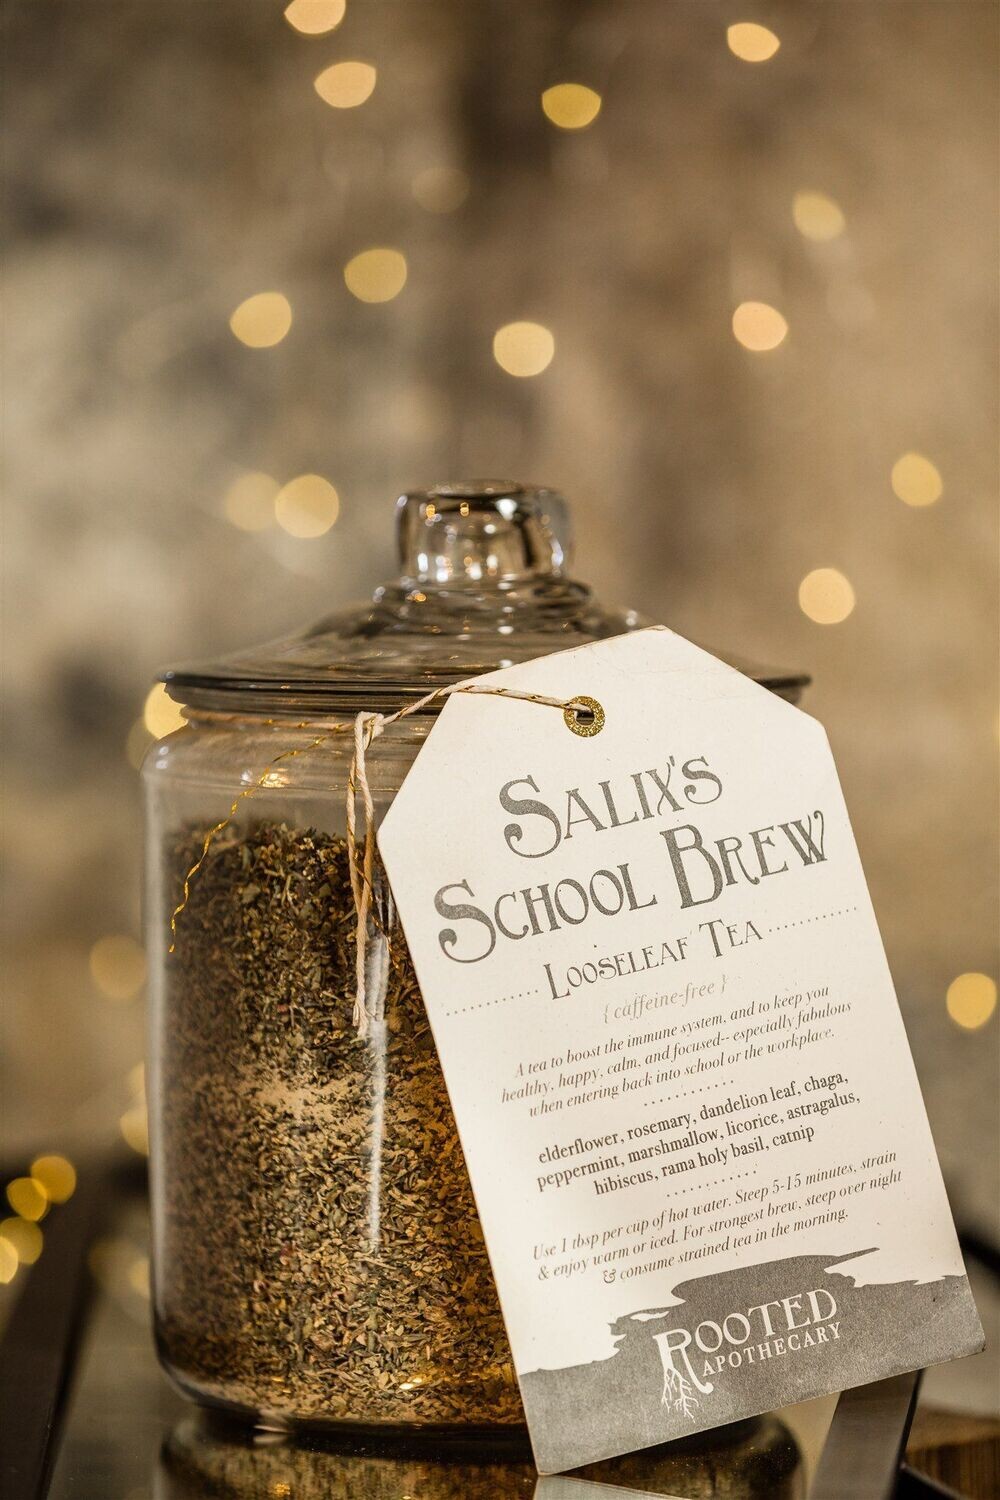 Salix's School Brew